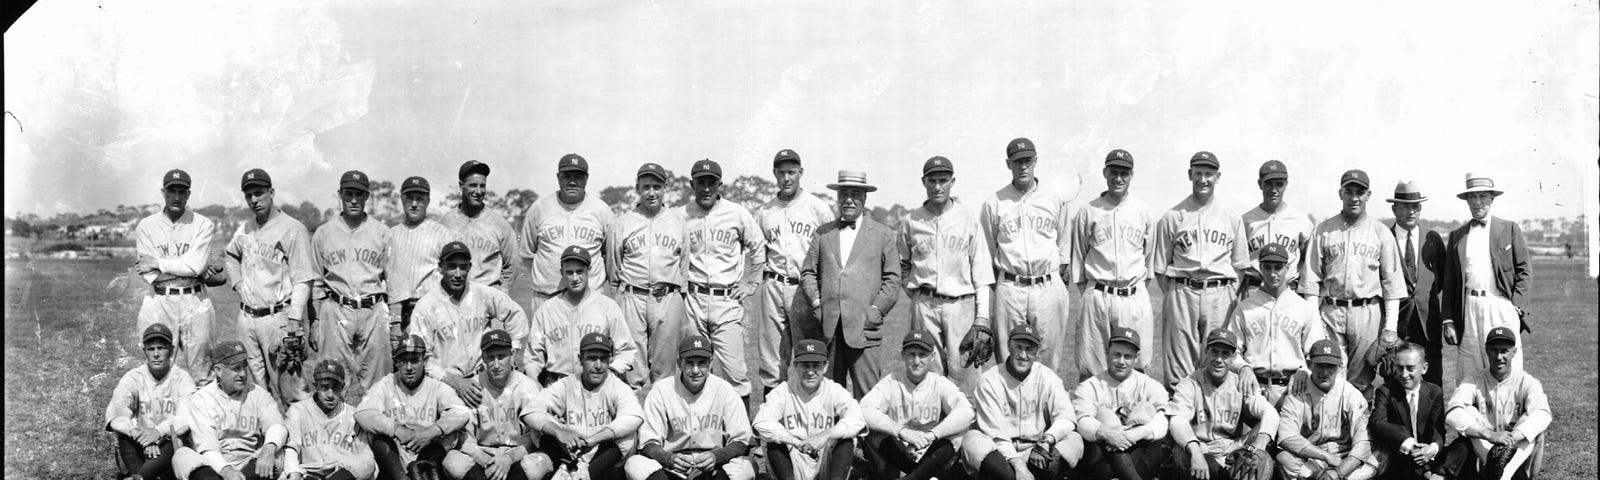 team 1927 yankees